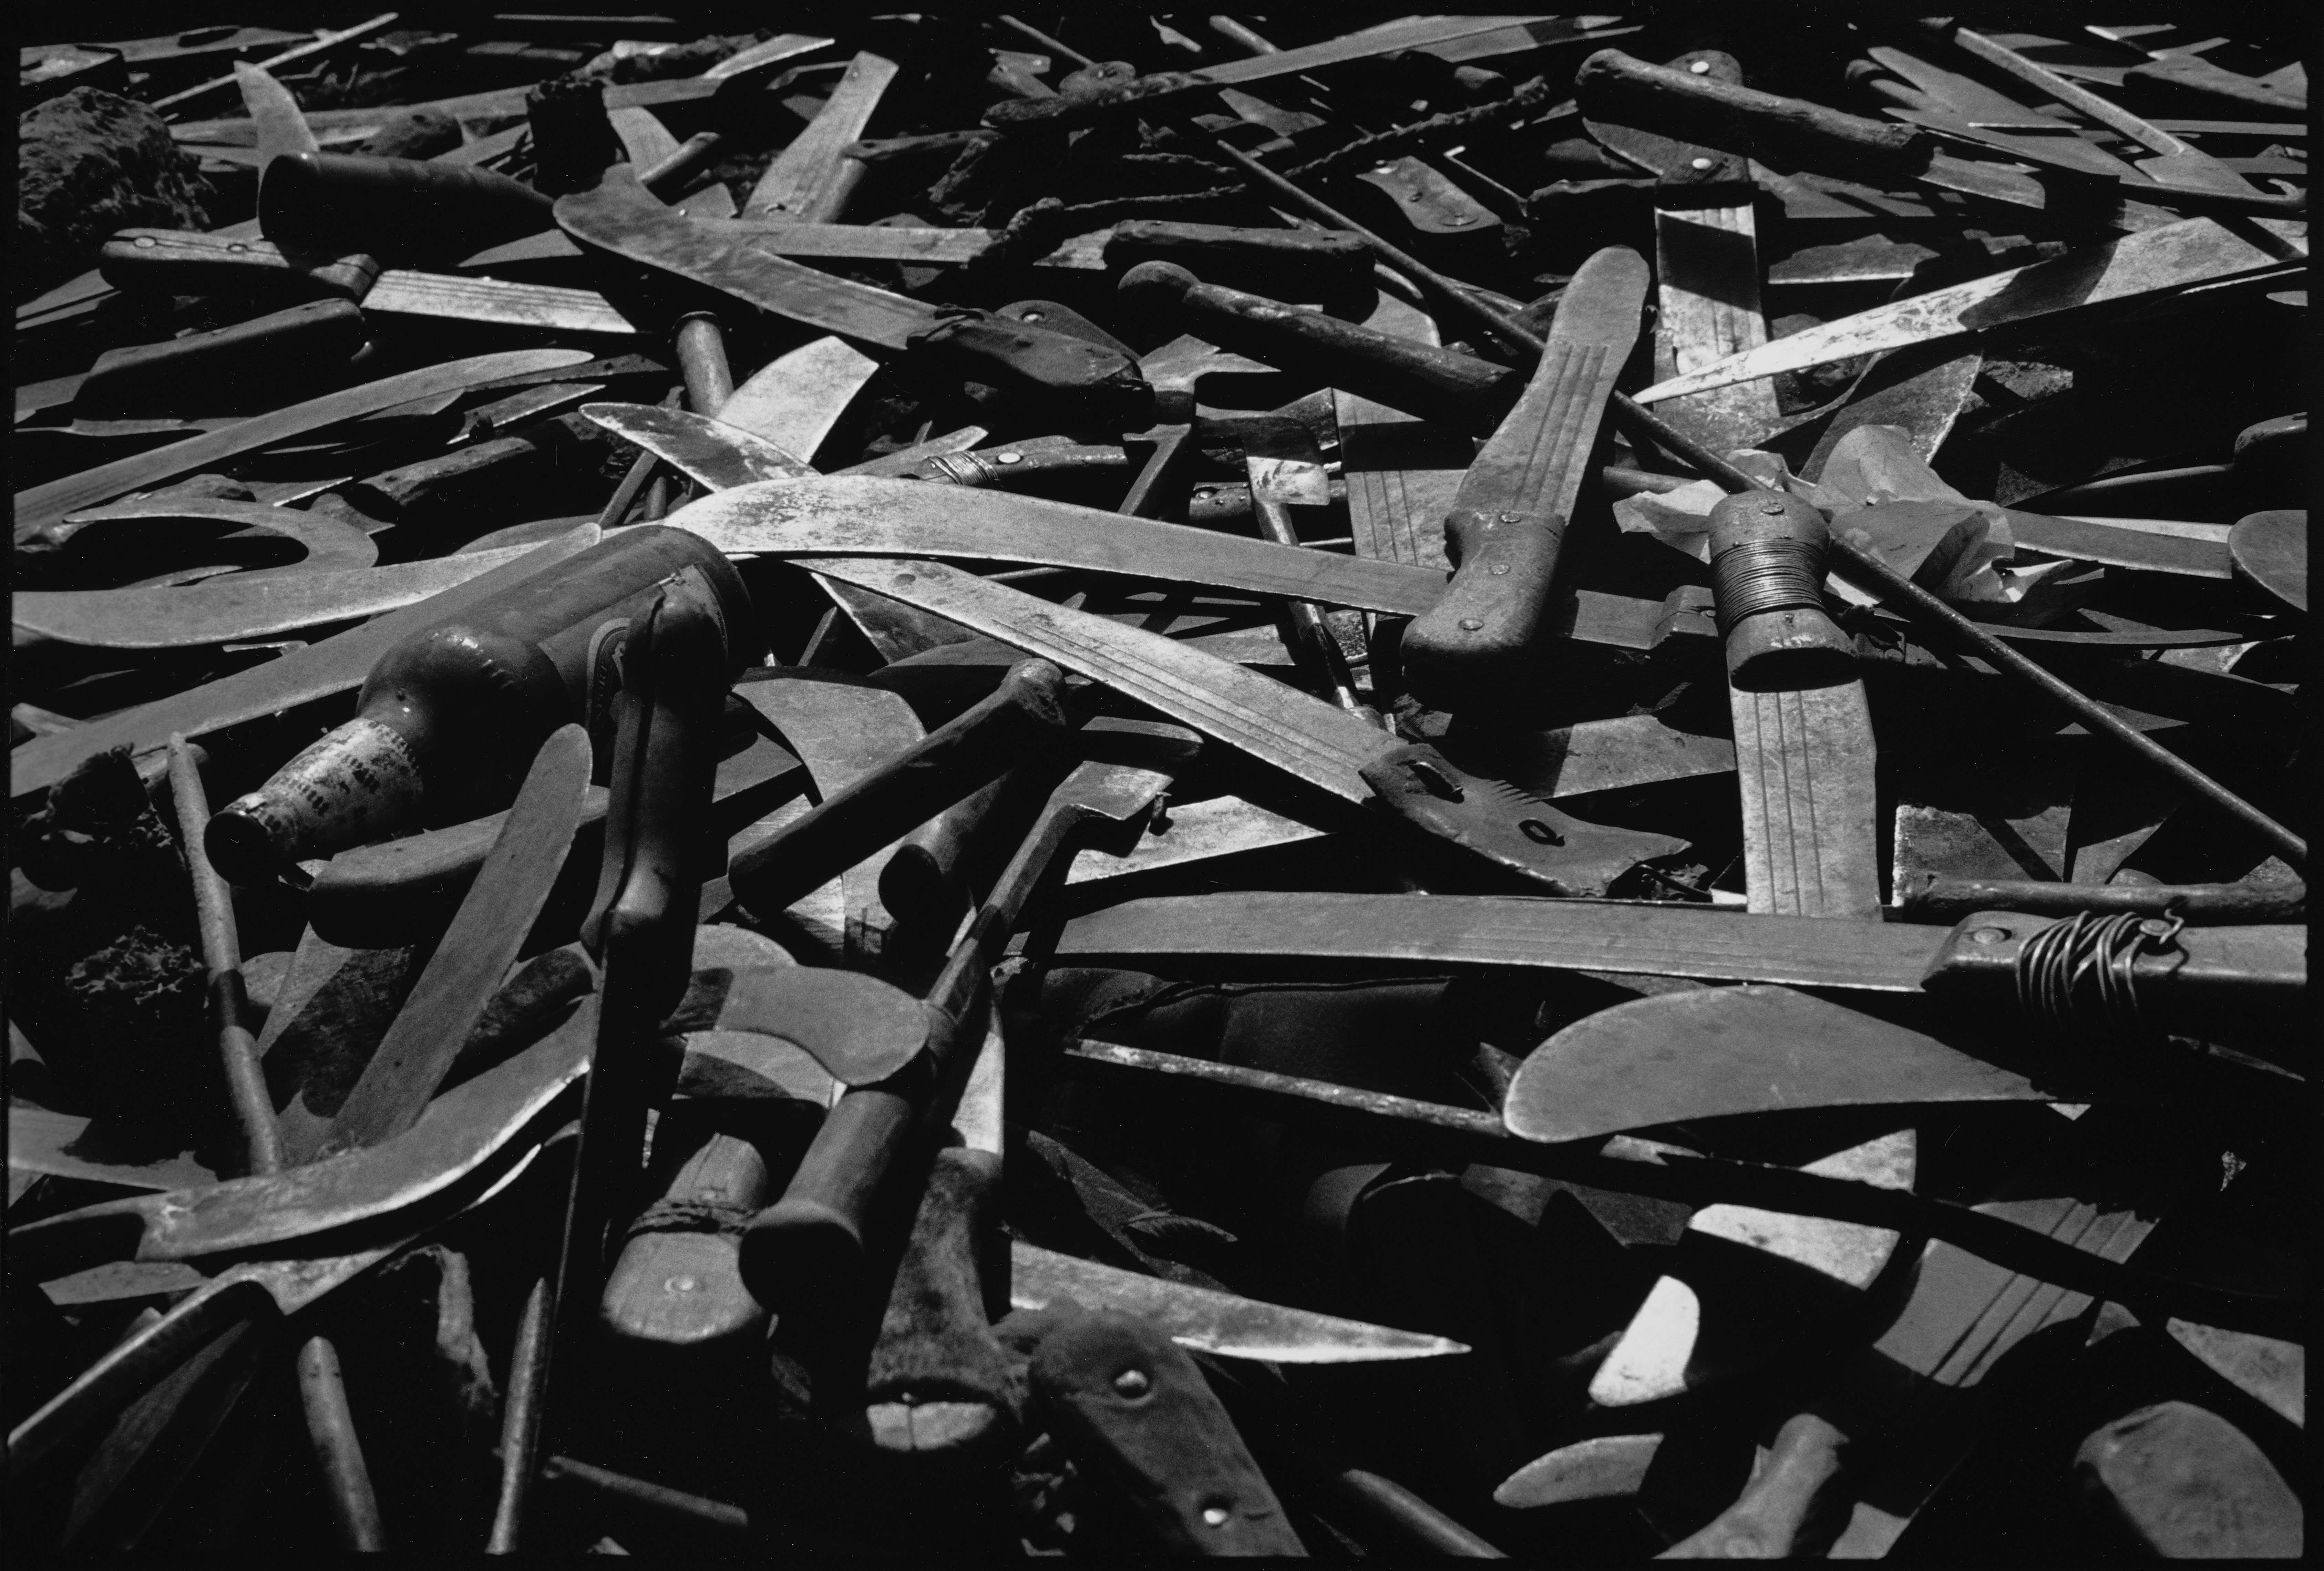 A pile of machetes in Goma, near the Rwandan border. Zaire 1994 